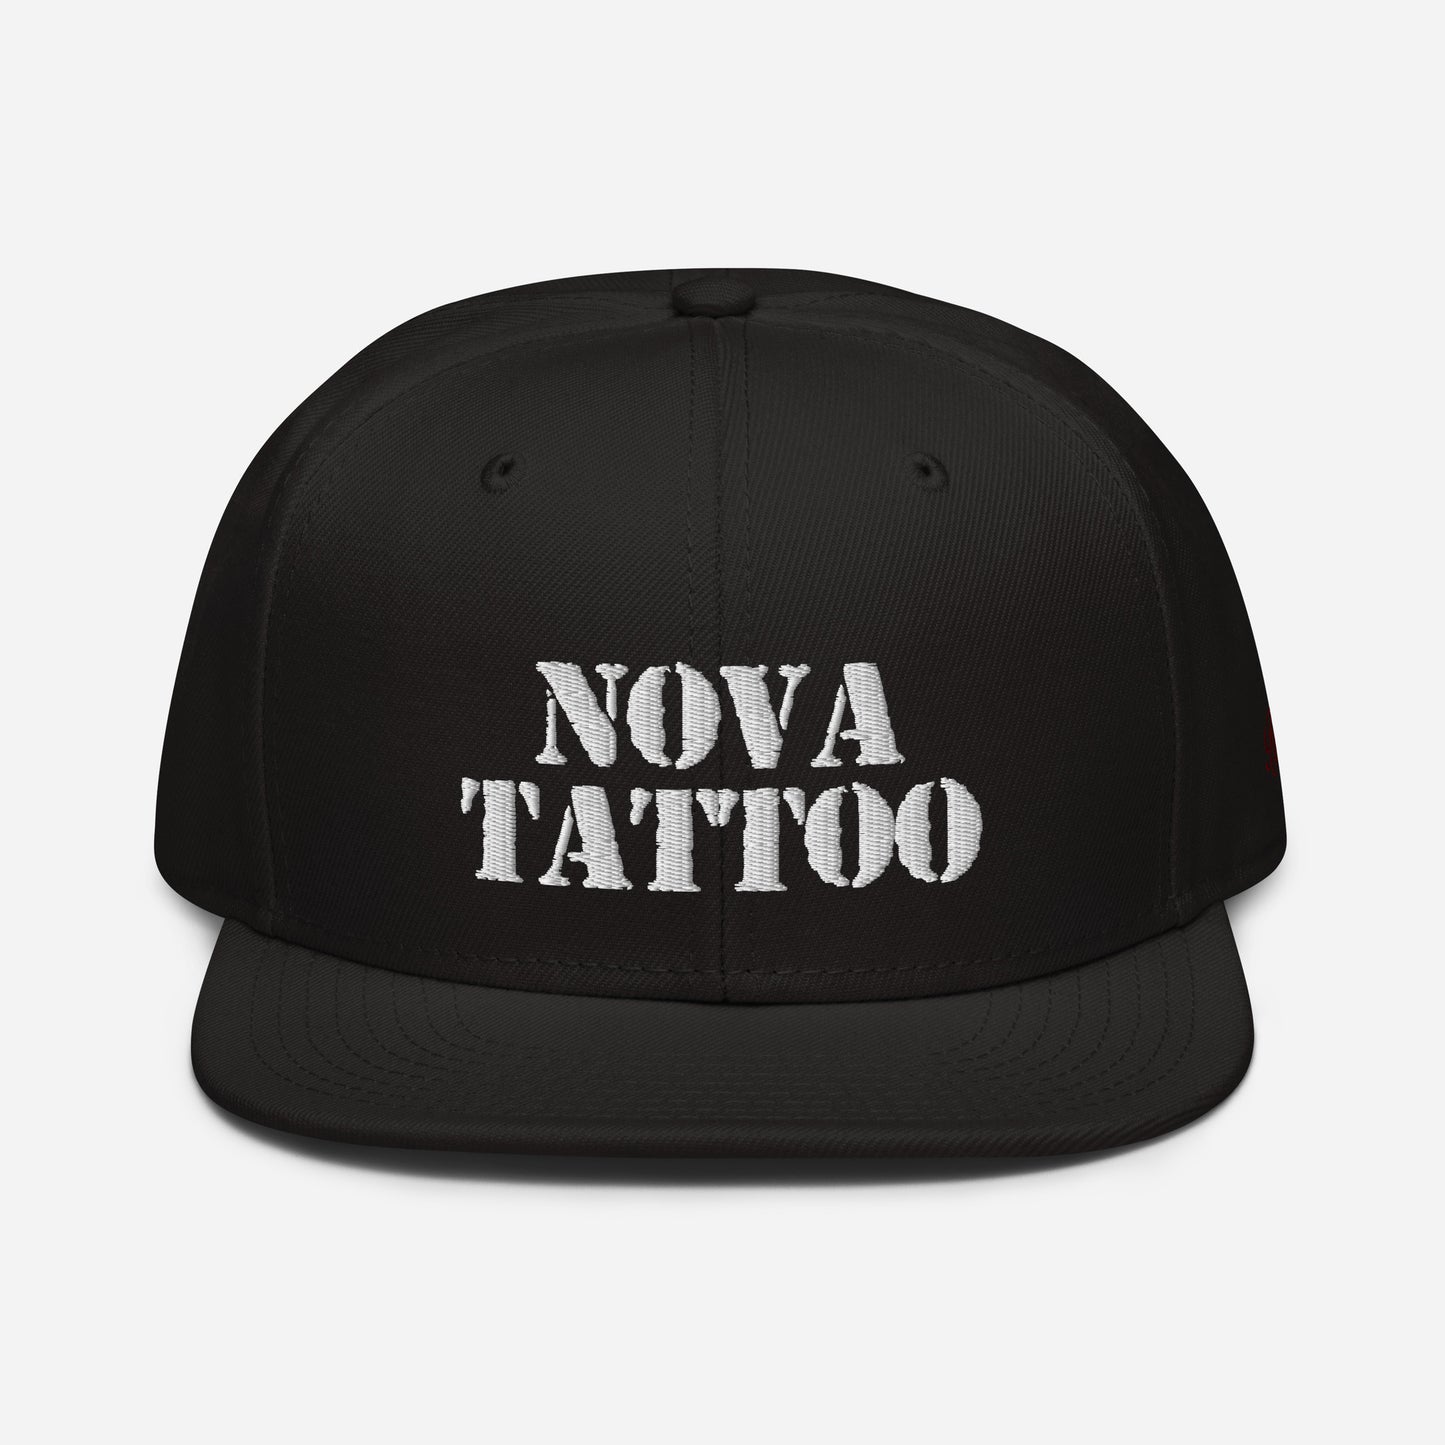 NOVA Tattoo Embroidered Snapback Hat